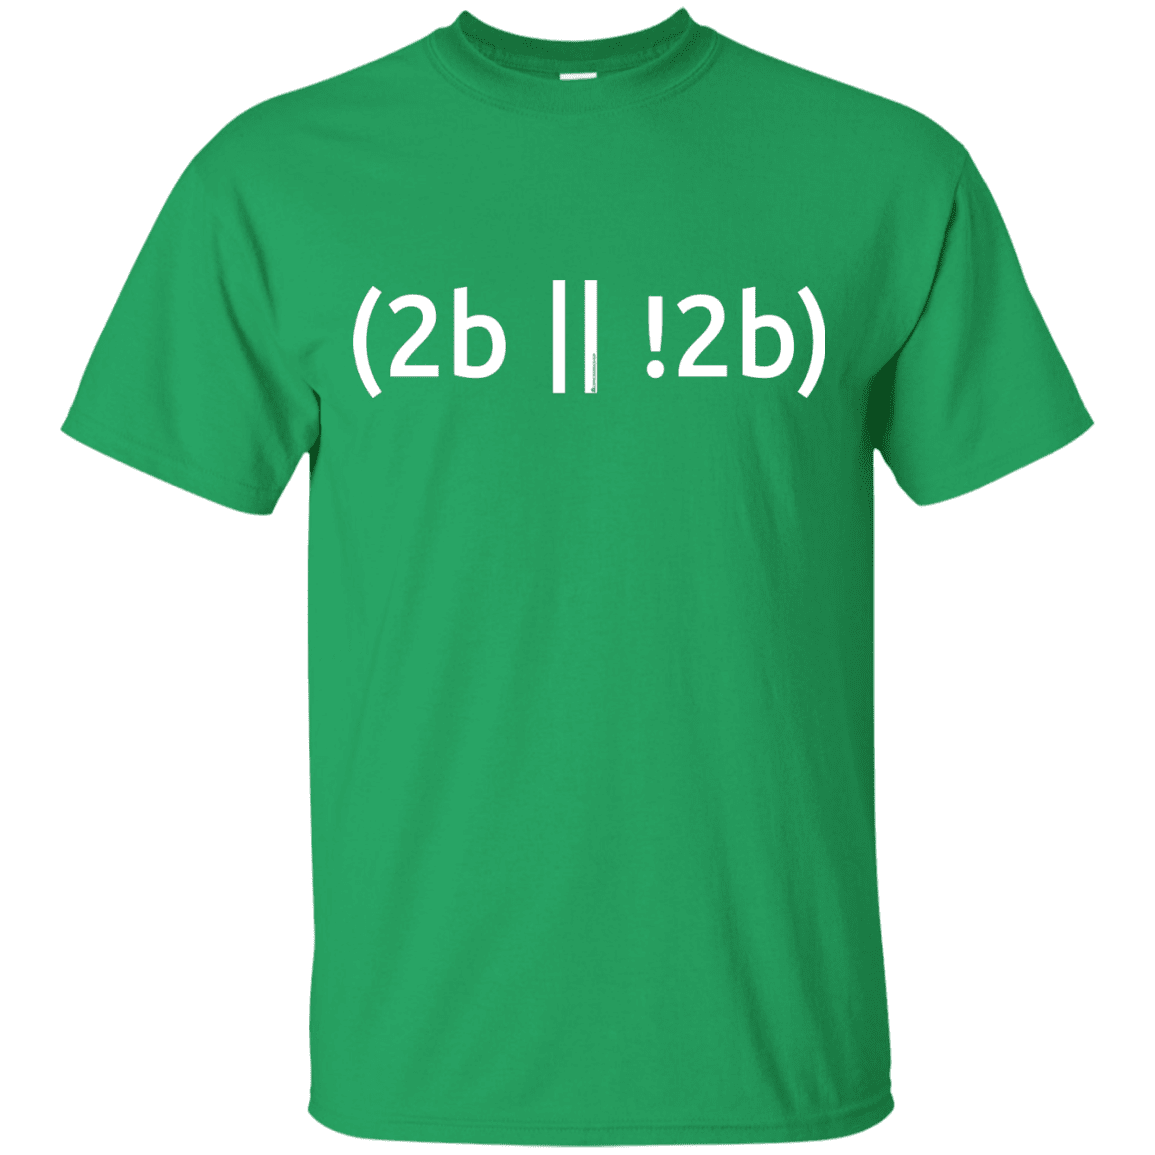 T-Shirts Irish Green / Small 2b Or Not 2b T-Shirt